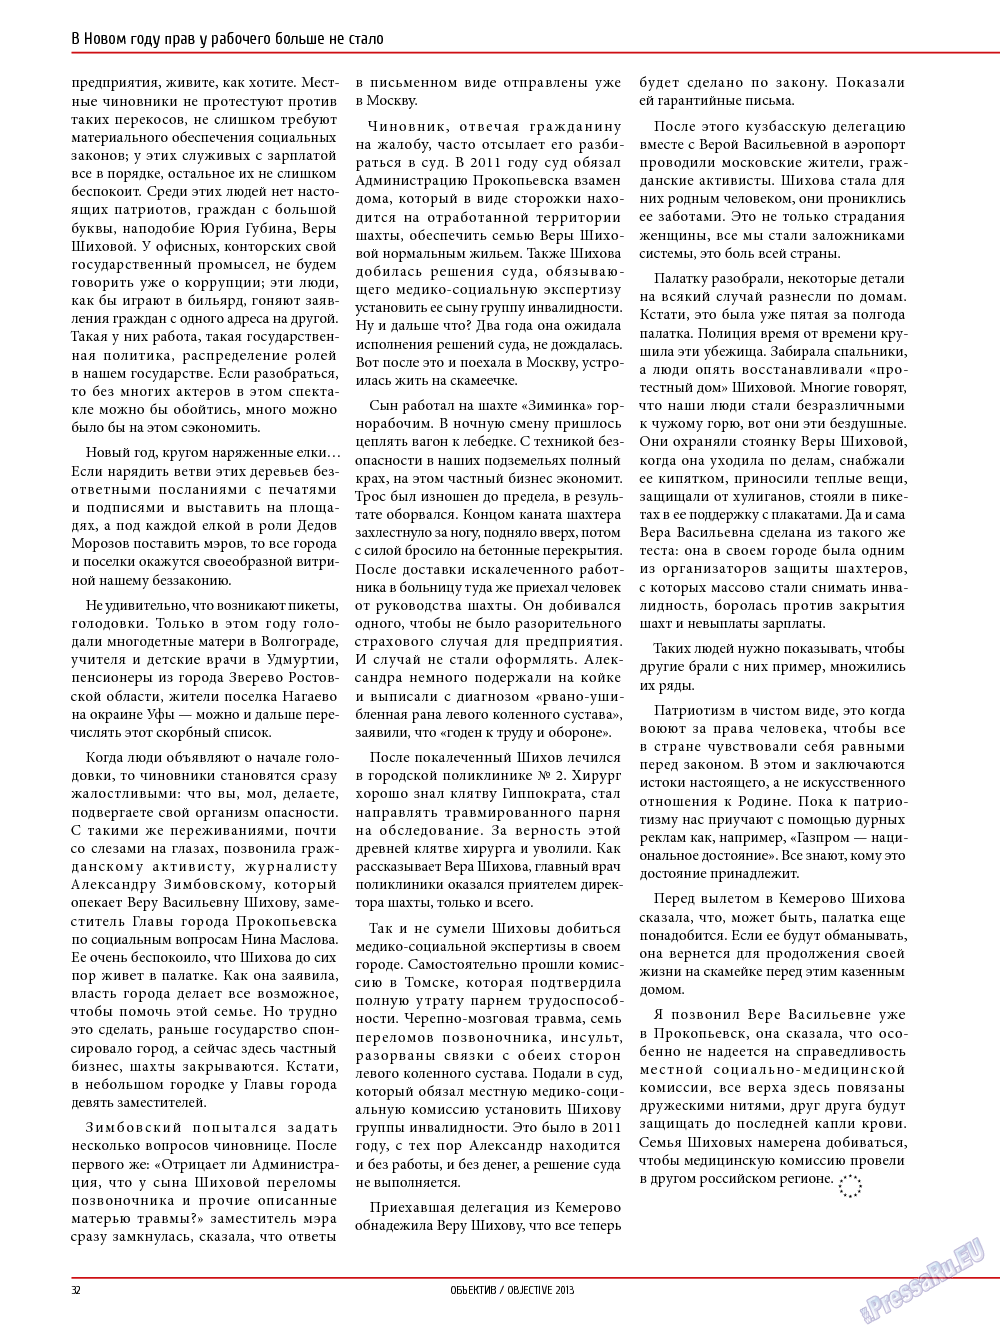 Объектив EU (журнал). 2014 год, номер 1, стр. 32